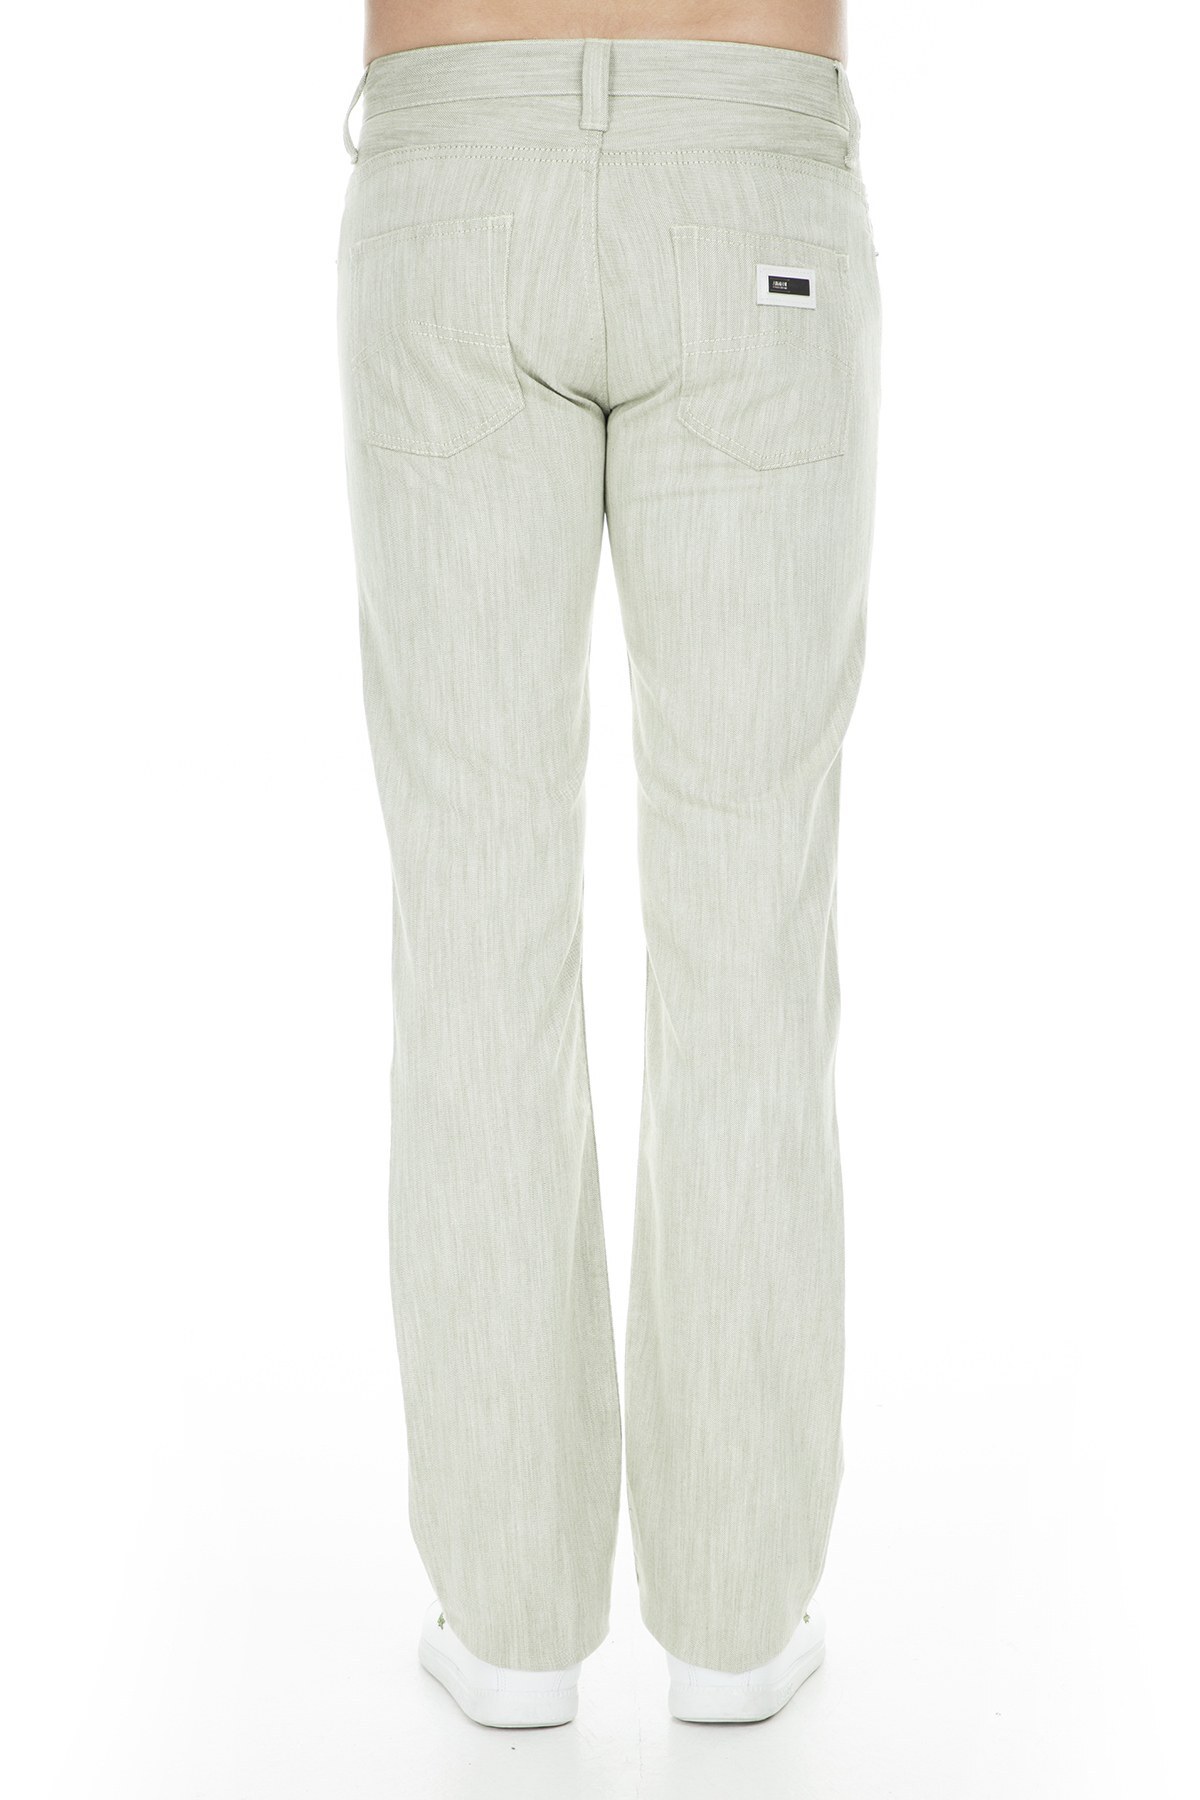 Armani Collezioni Jeans Erkek Kot Pantolon AIJ15 2B C56 